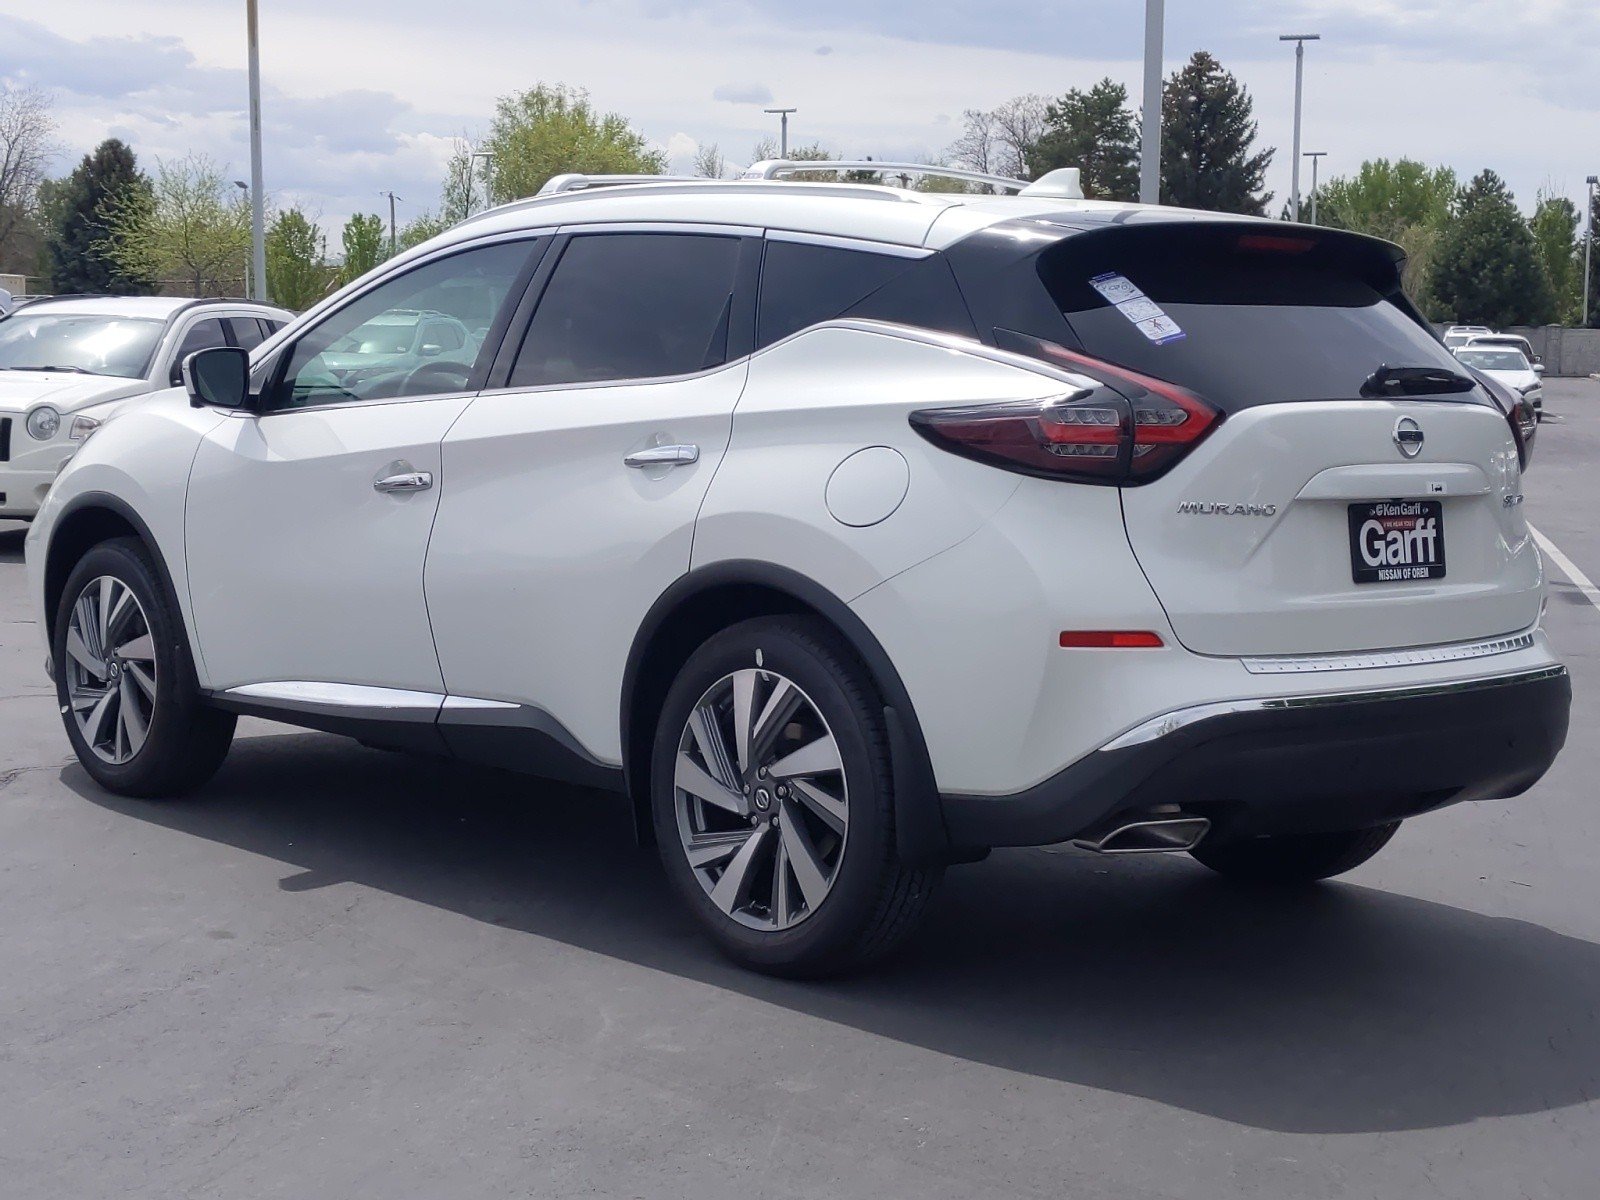 New 2020 Nissan Murano Sl Sport Utility In Salt Lake City 2n00134